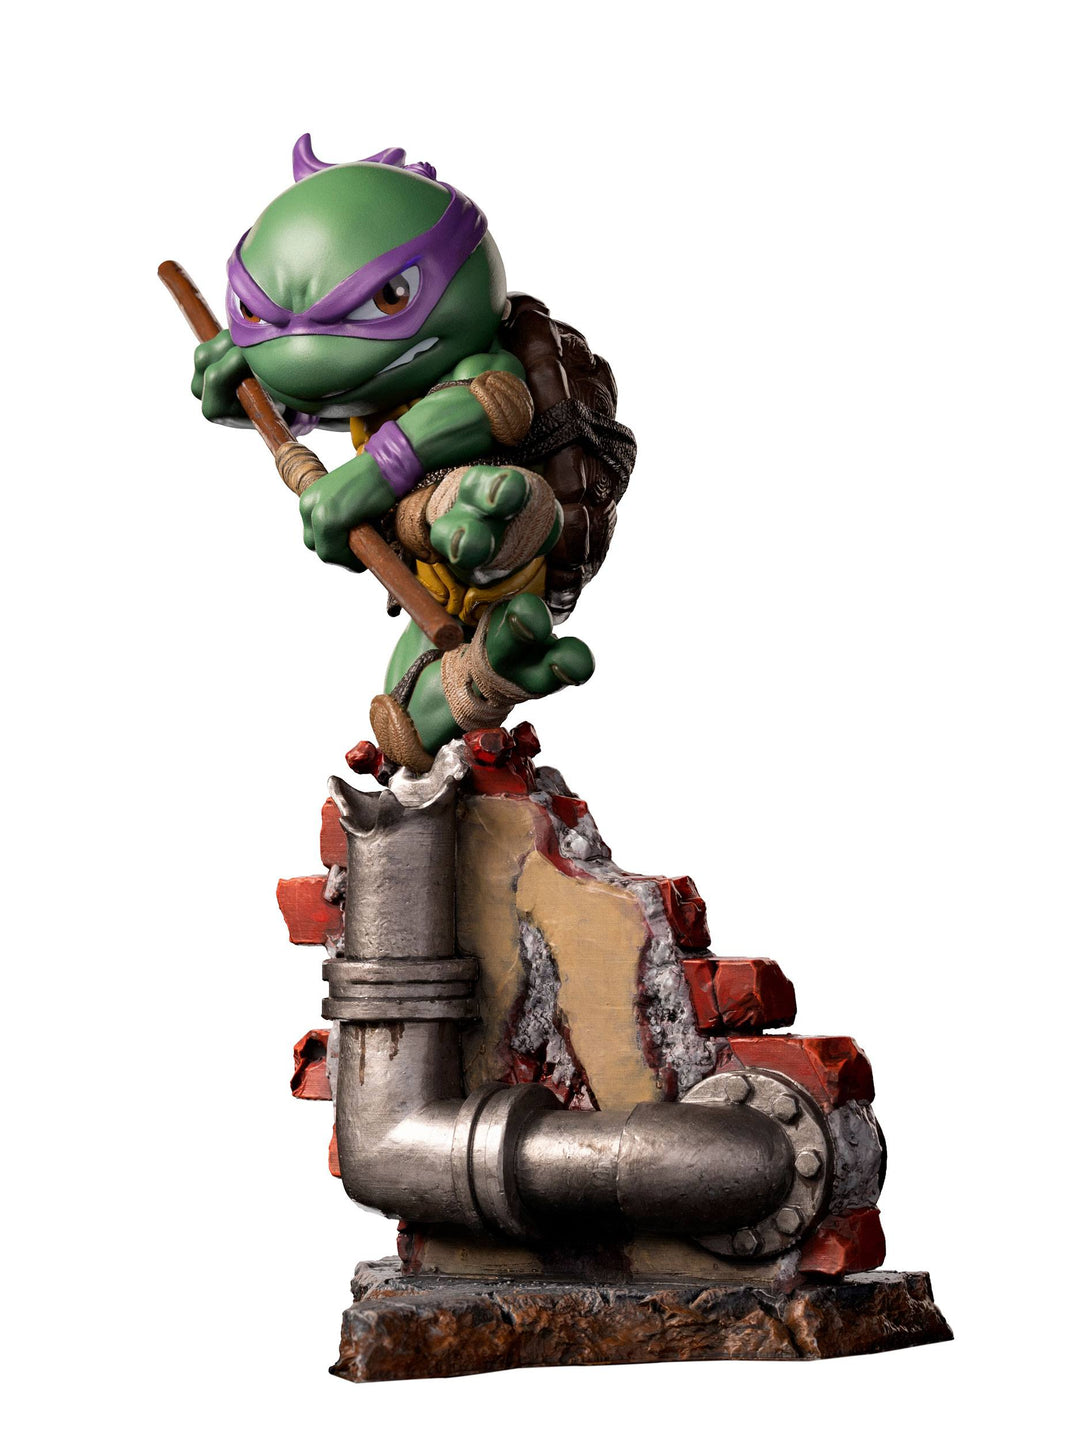 Iron Studios Teenage Mutant Ninja Turtles MiniCo Donatello